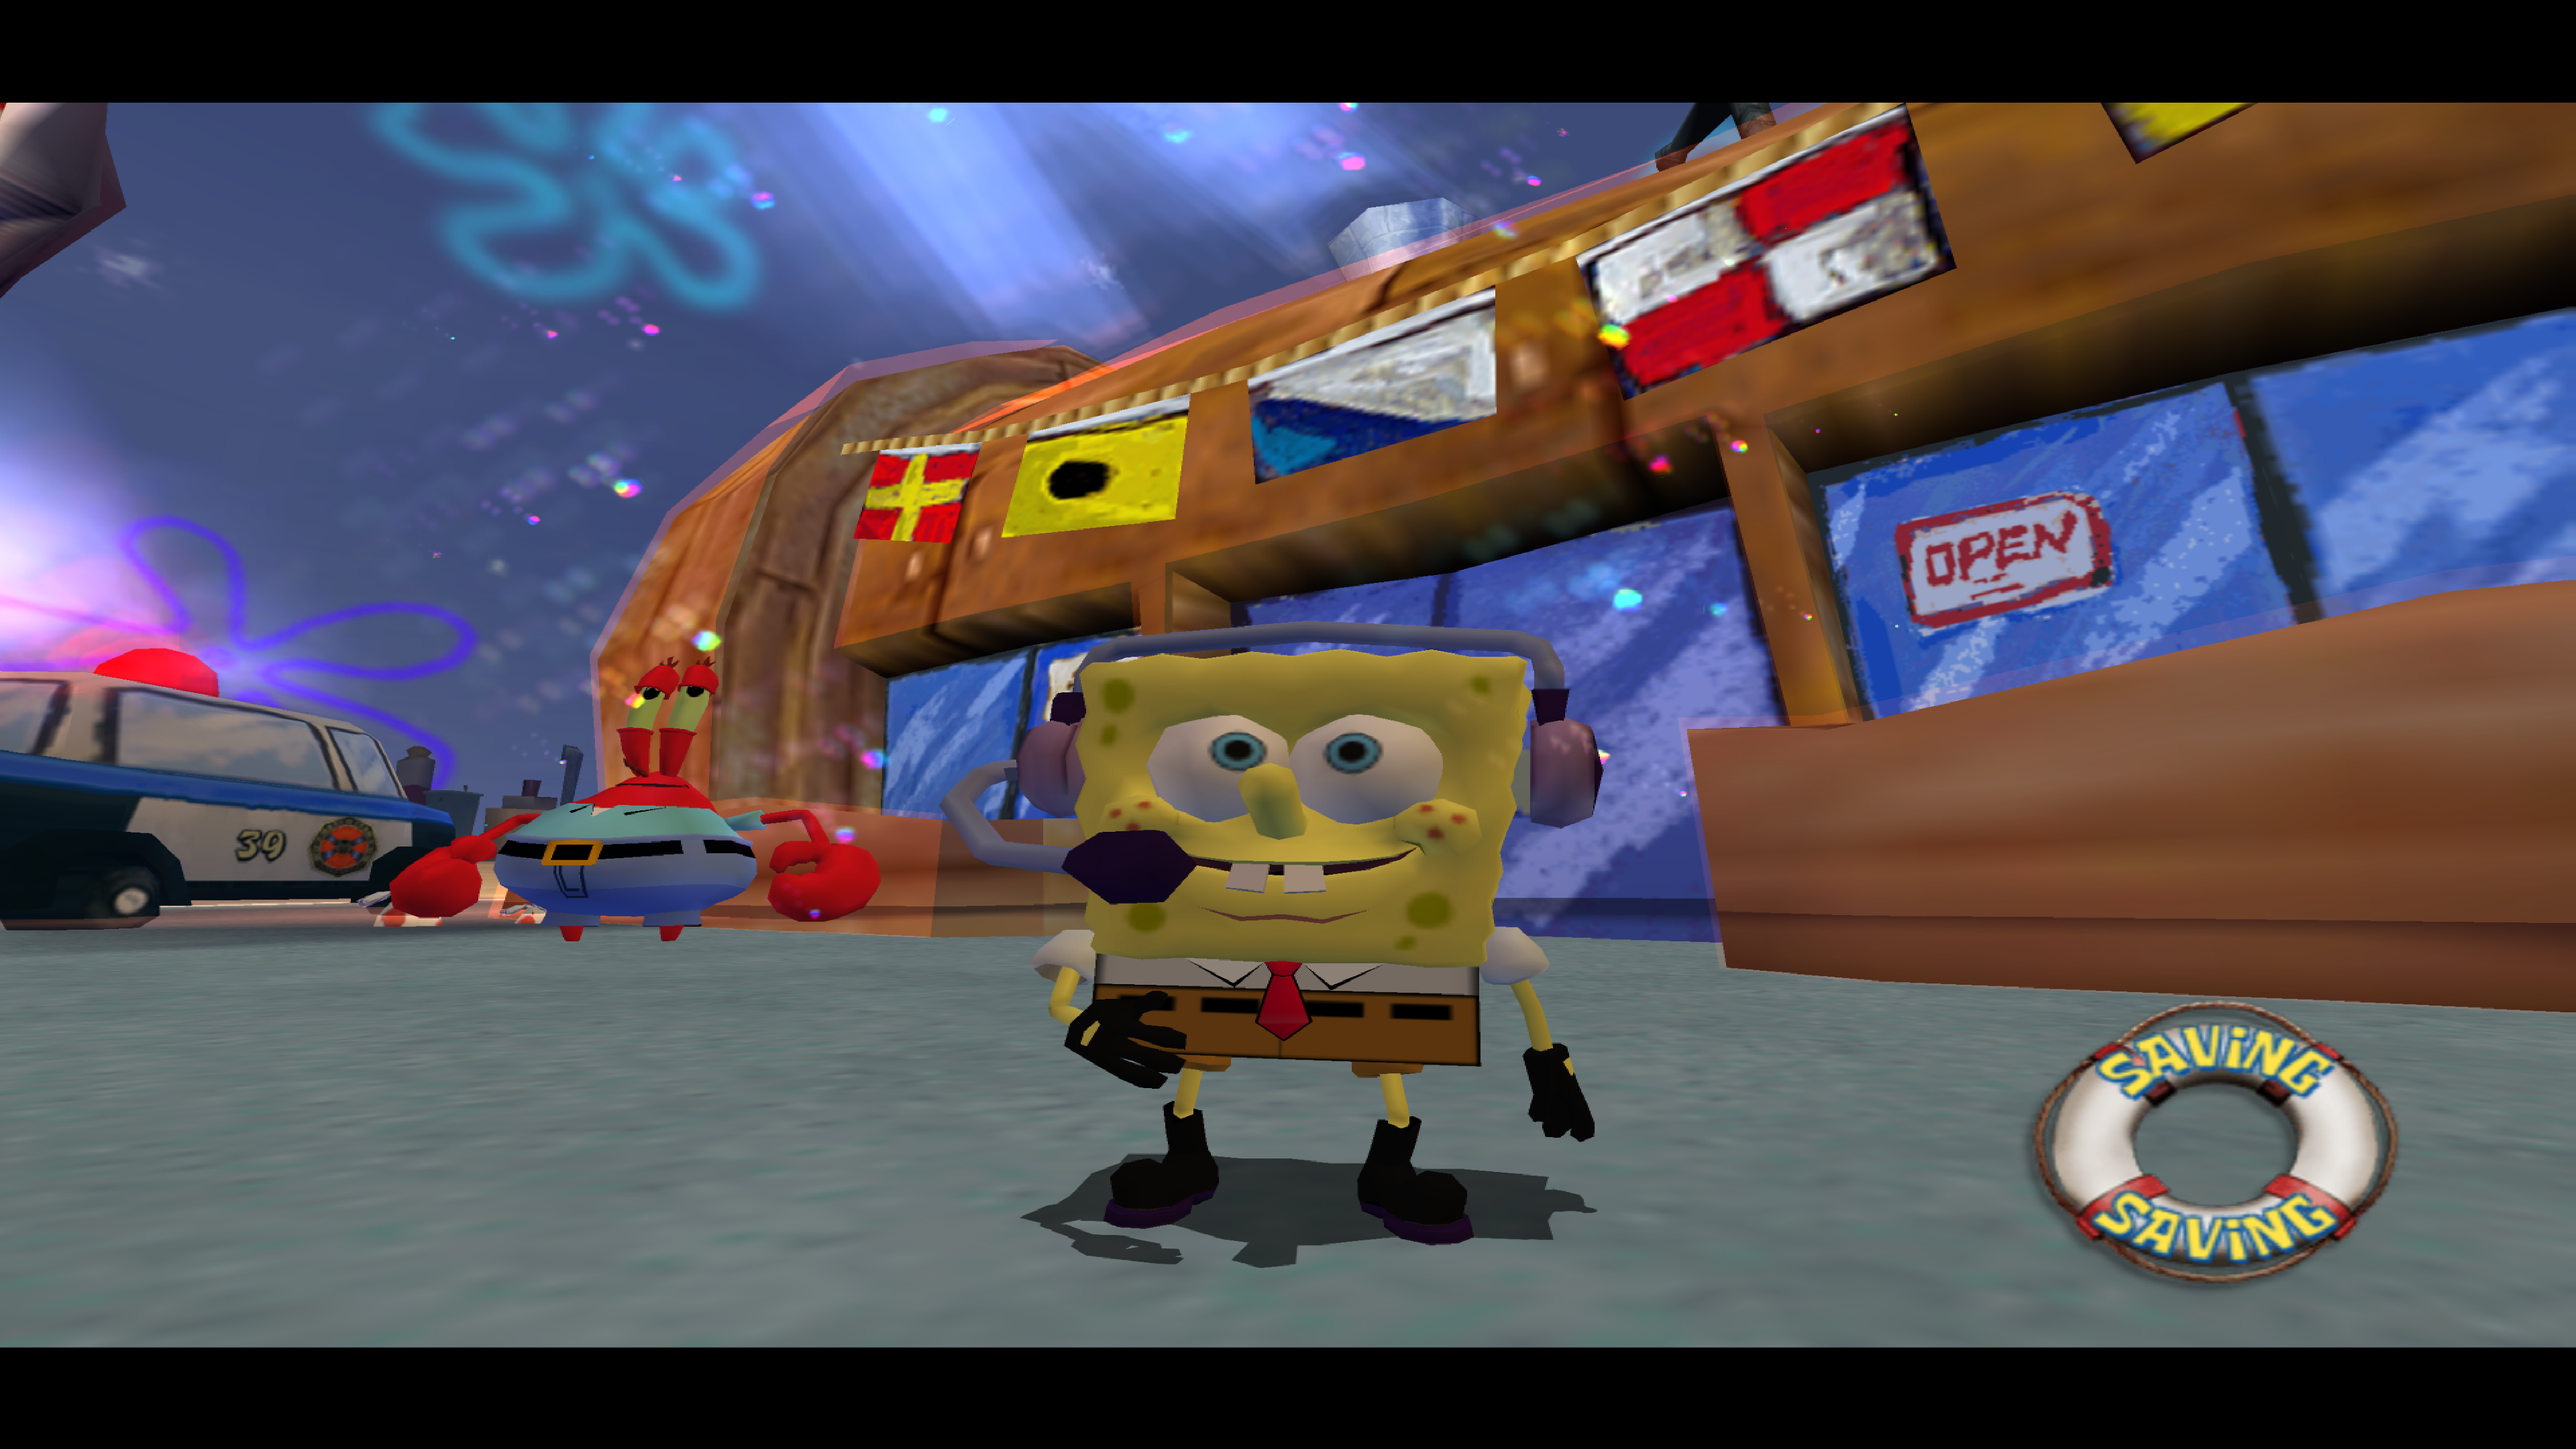 spongebob squarepants movie game pc download free